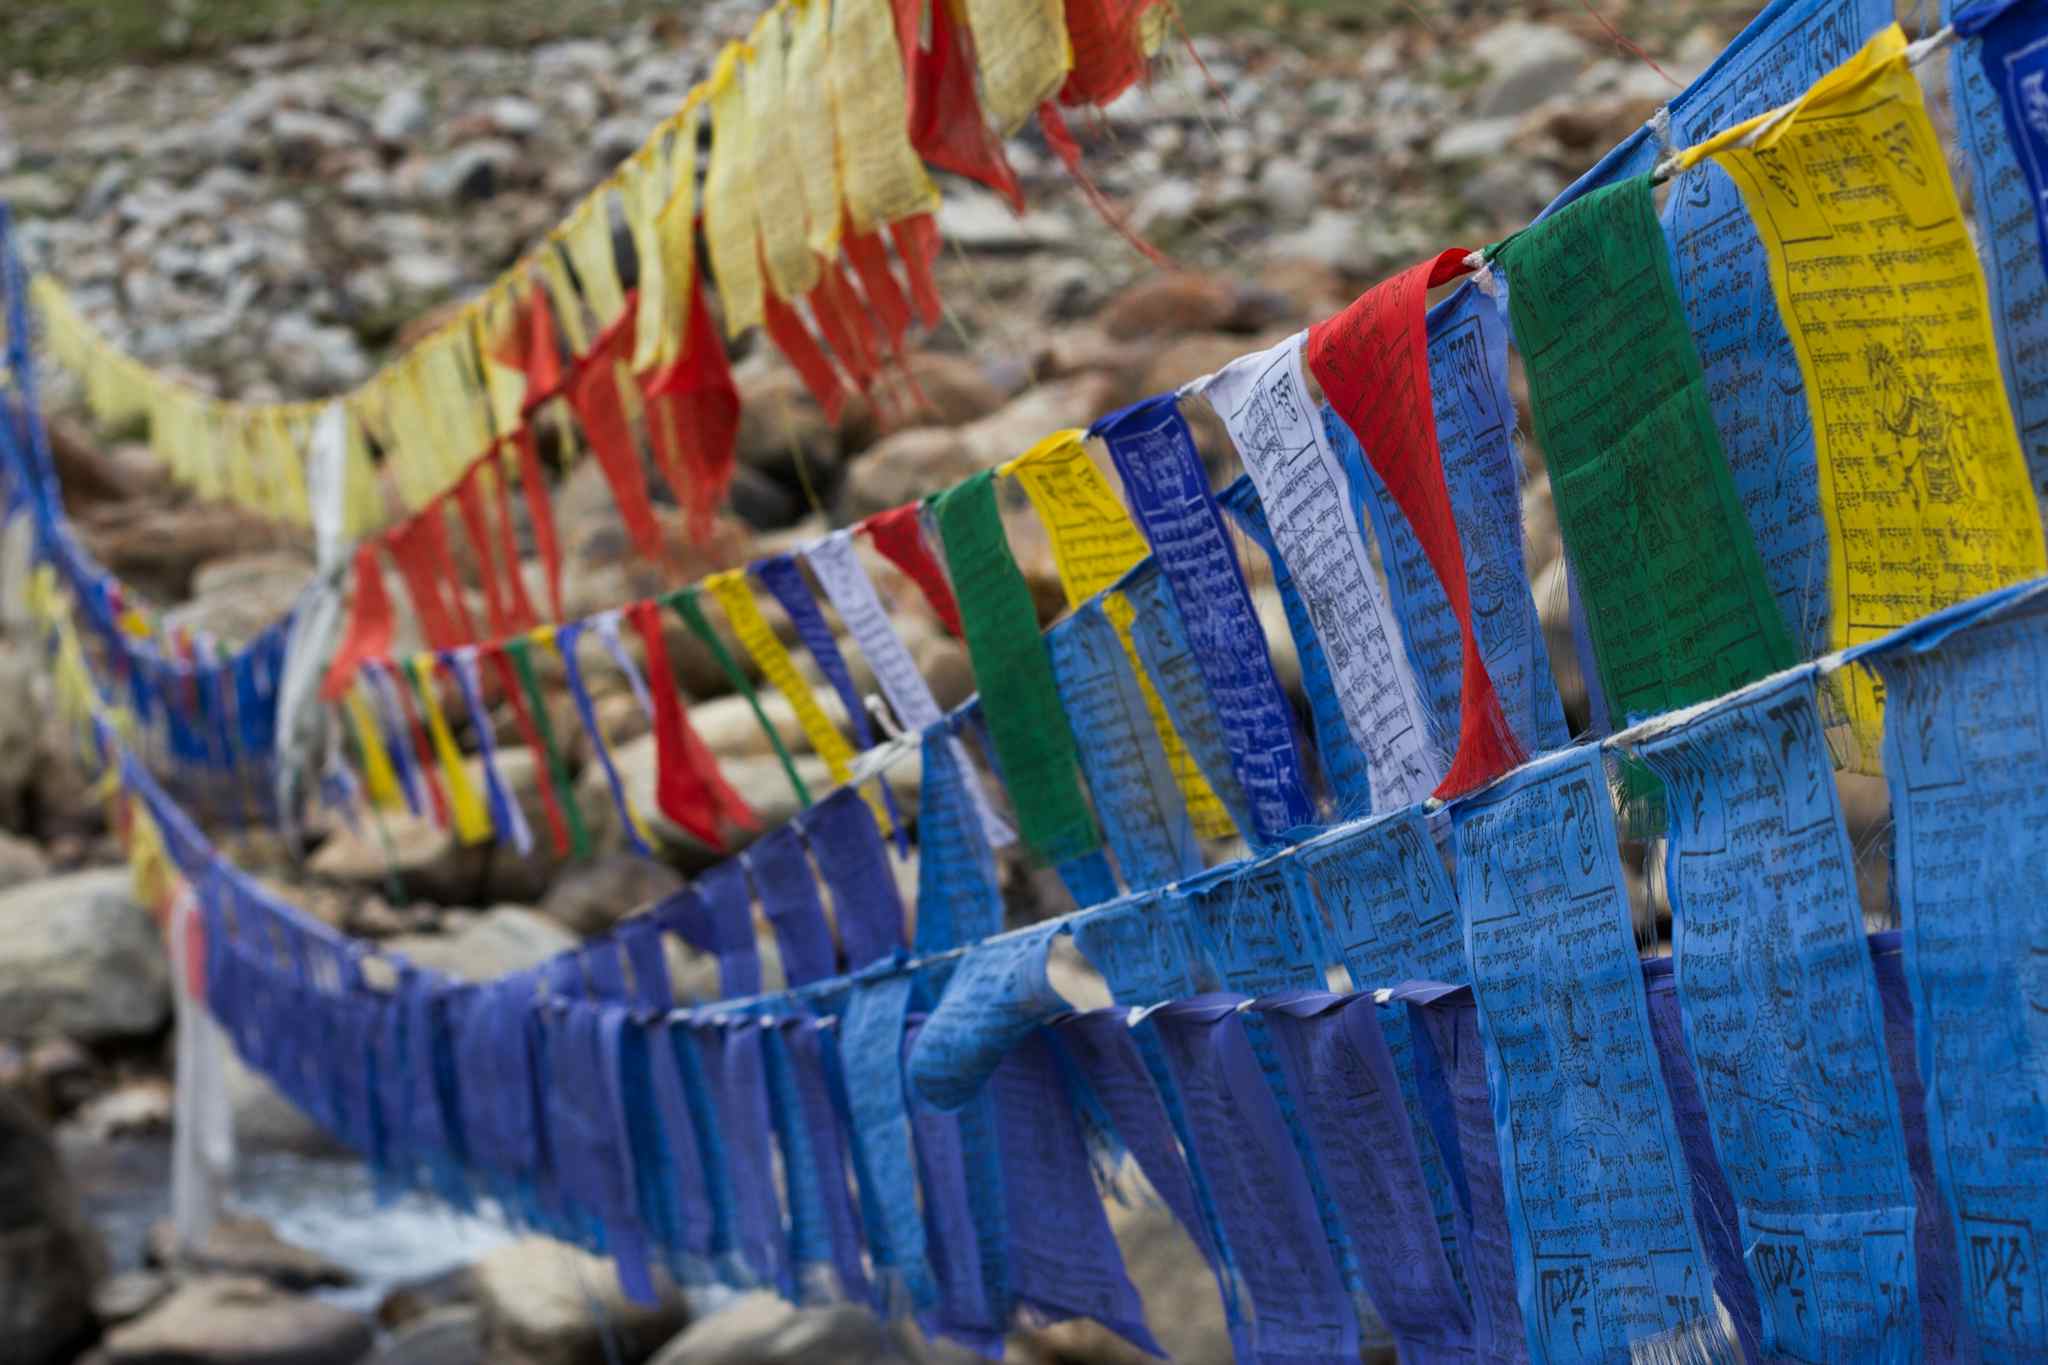 Prayer flags flying in Ladakh, India